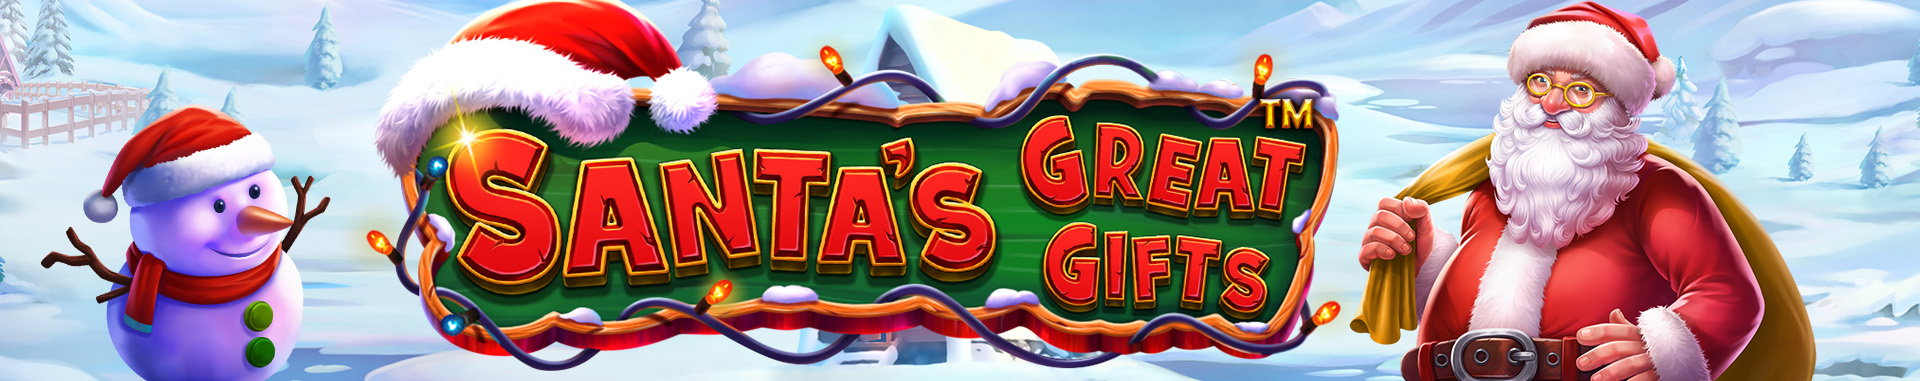 Tragaperras online Santa's Great Gift